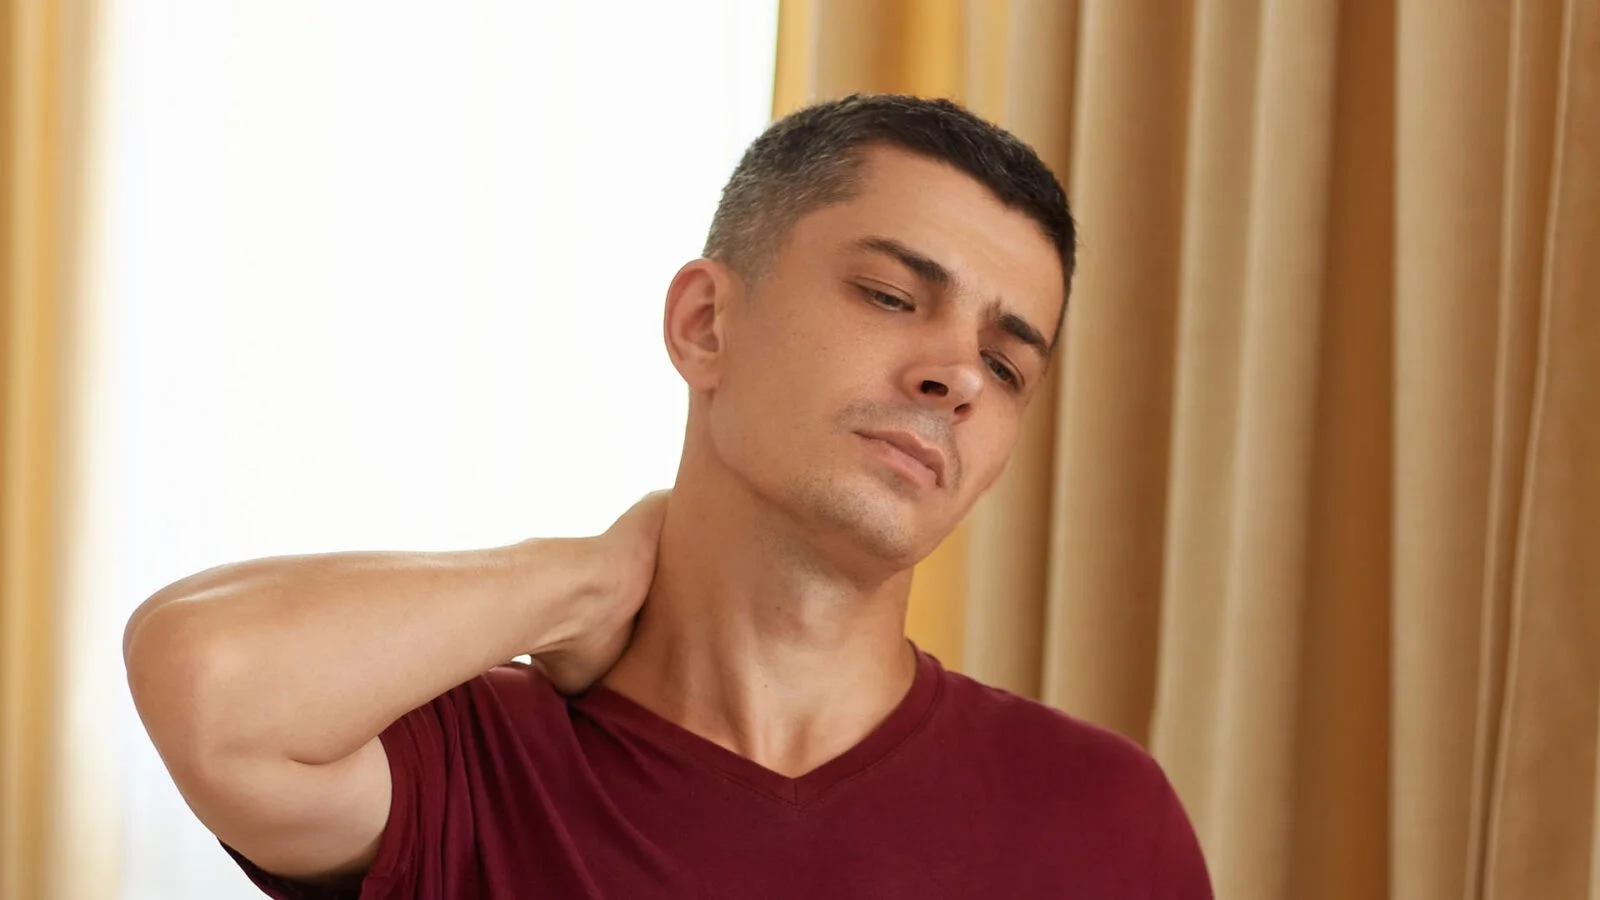 neck injury